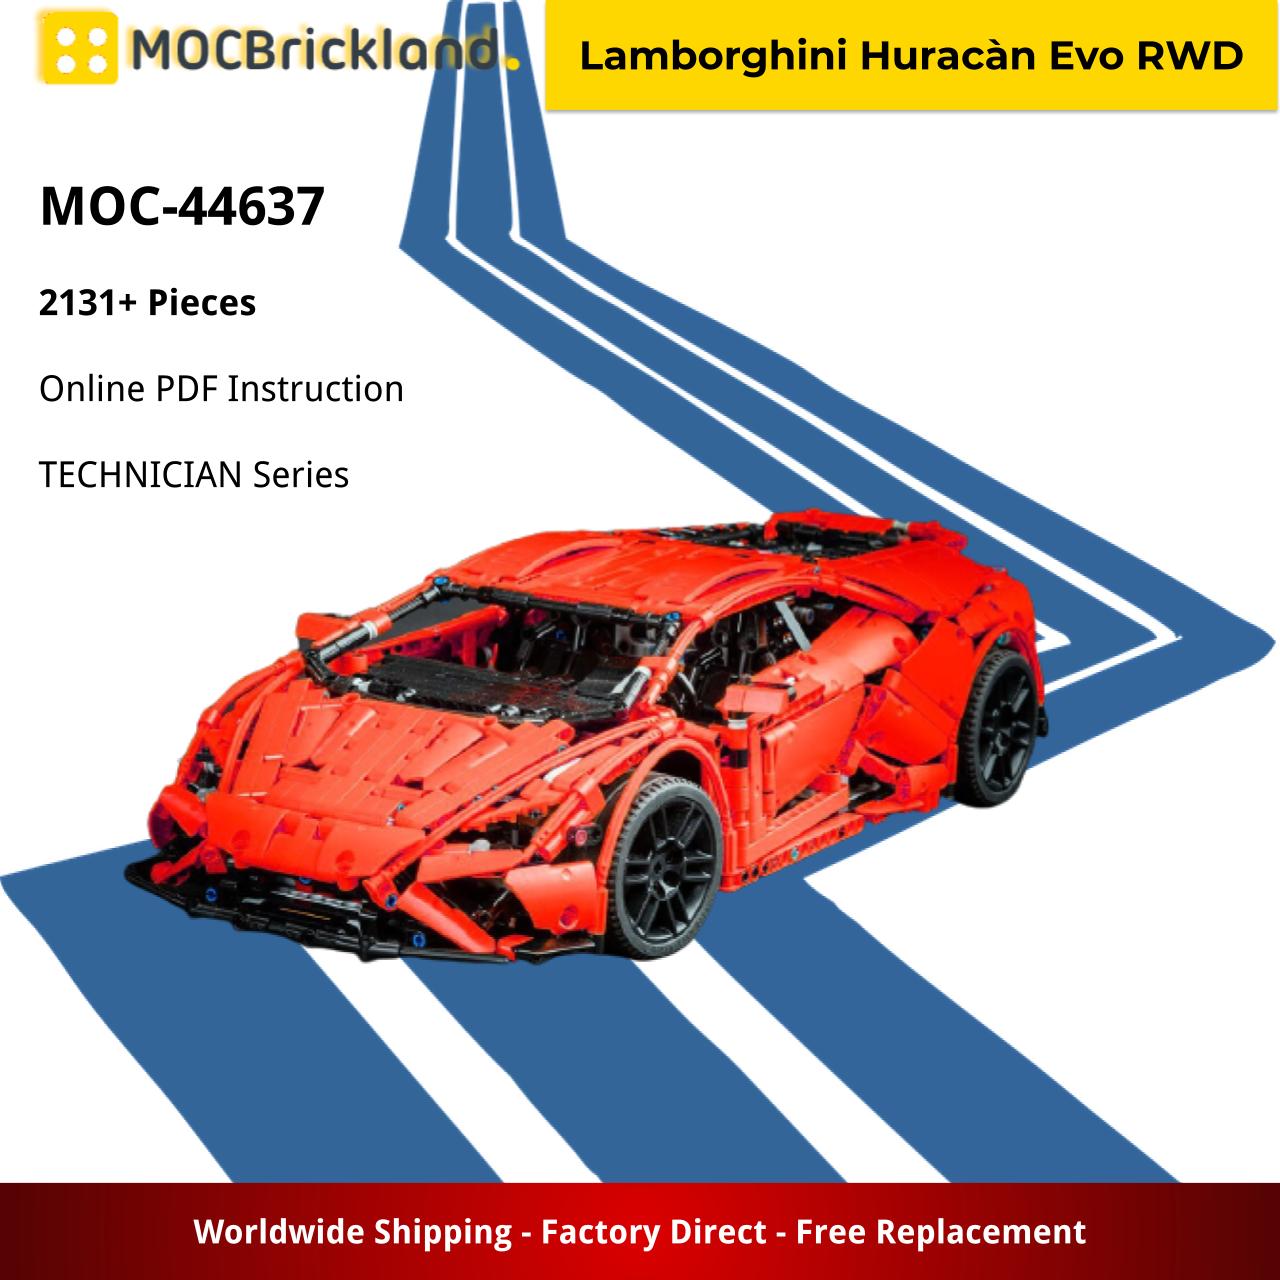 TECHNICIAN MOC-44637 Lamborghini Huracàn Evo RWD MOCBRICKLAND